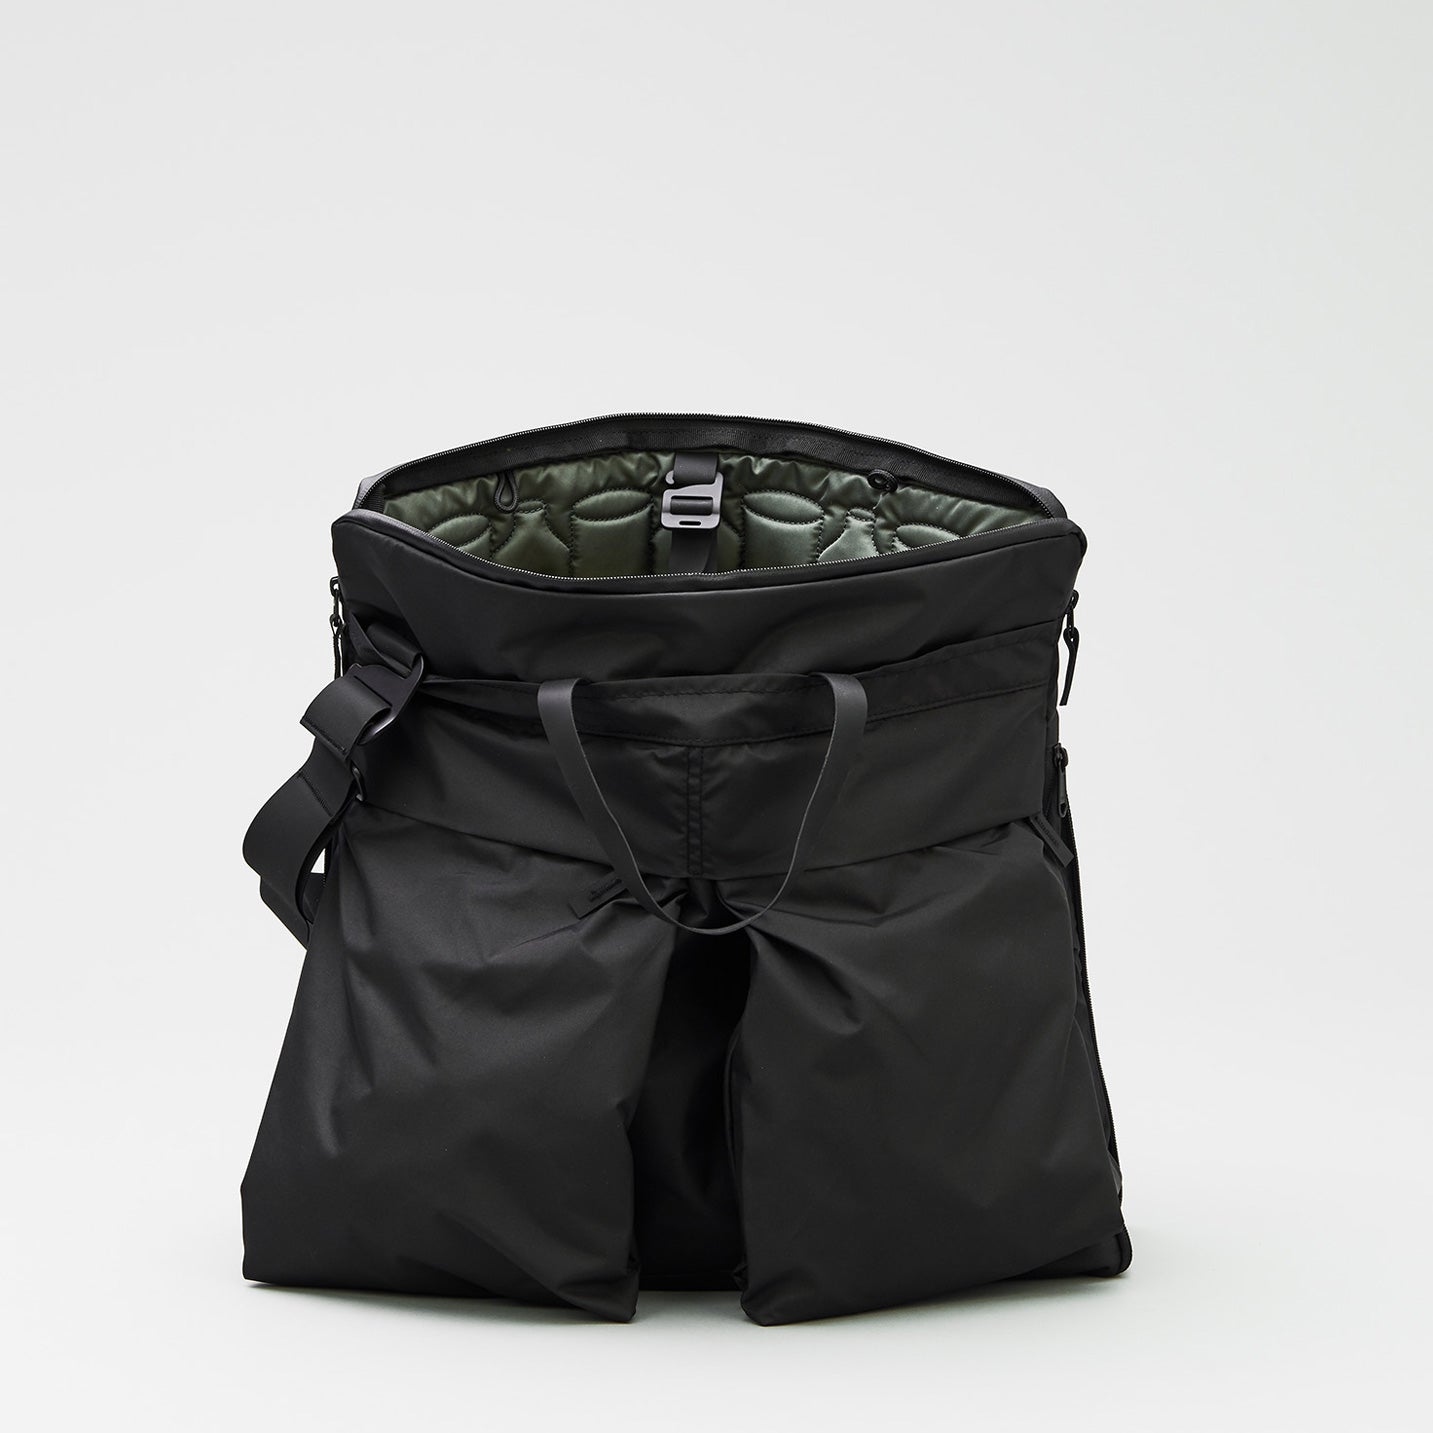 The Tote Bag black